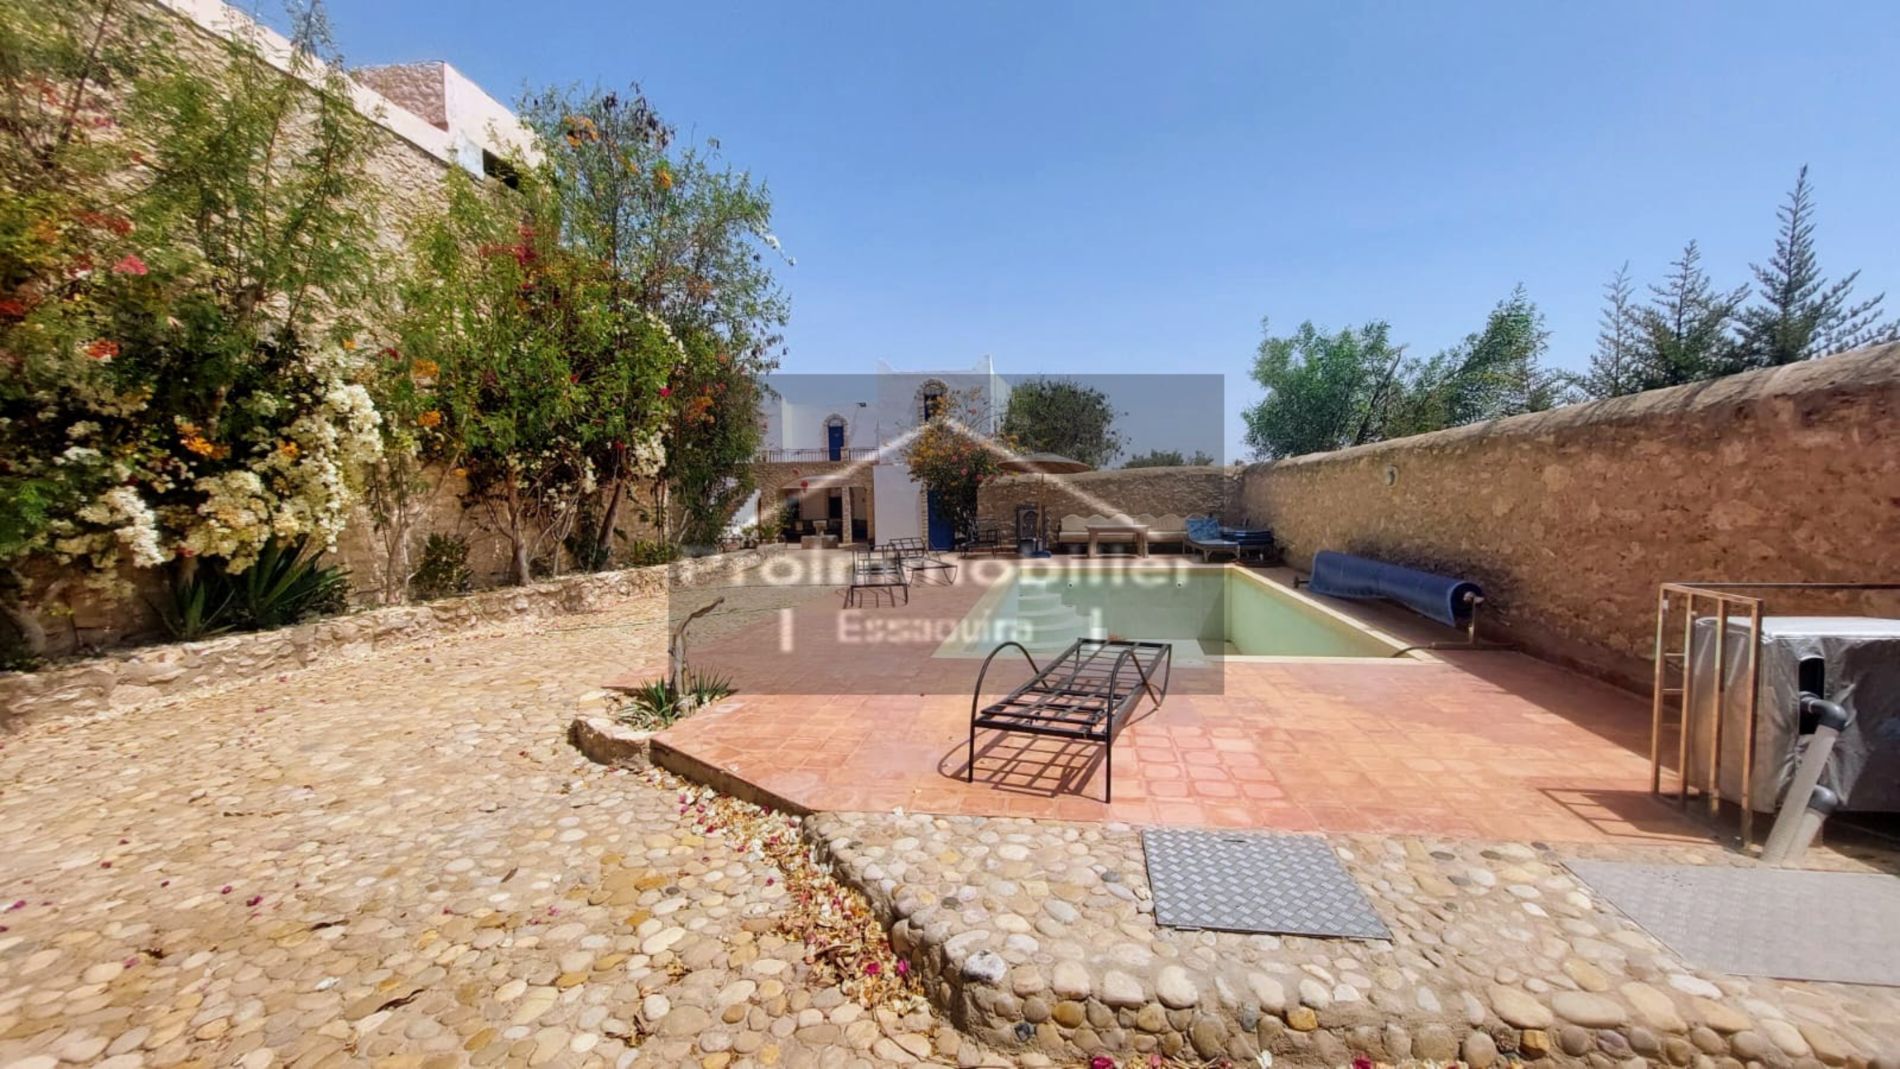 23-04-05-VM Essaouira Land'de satılık 220 m² kırsalda Güzel Ev 600 m²